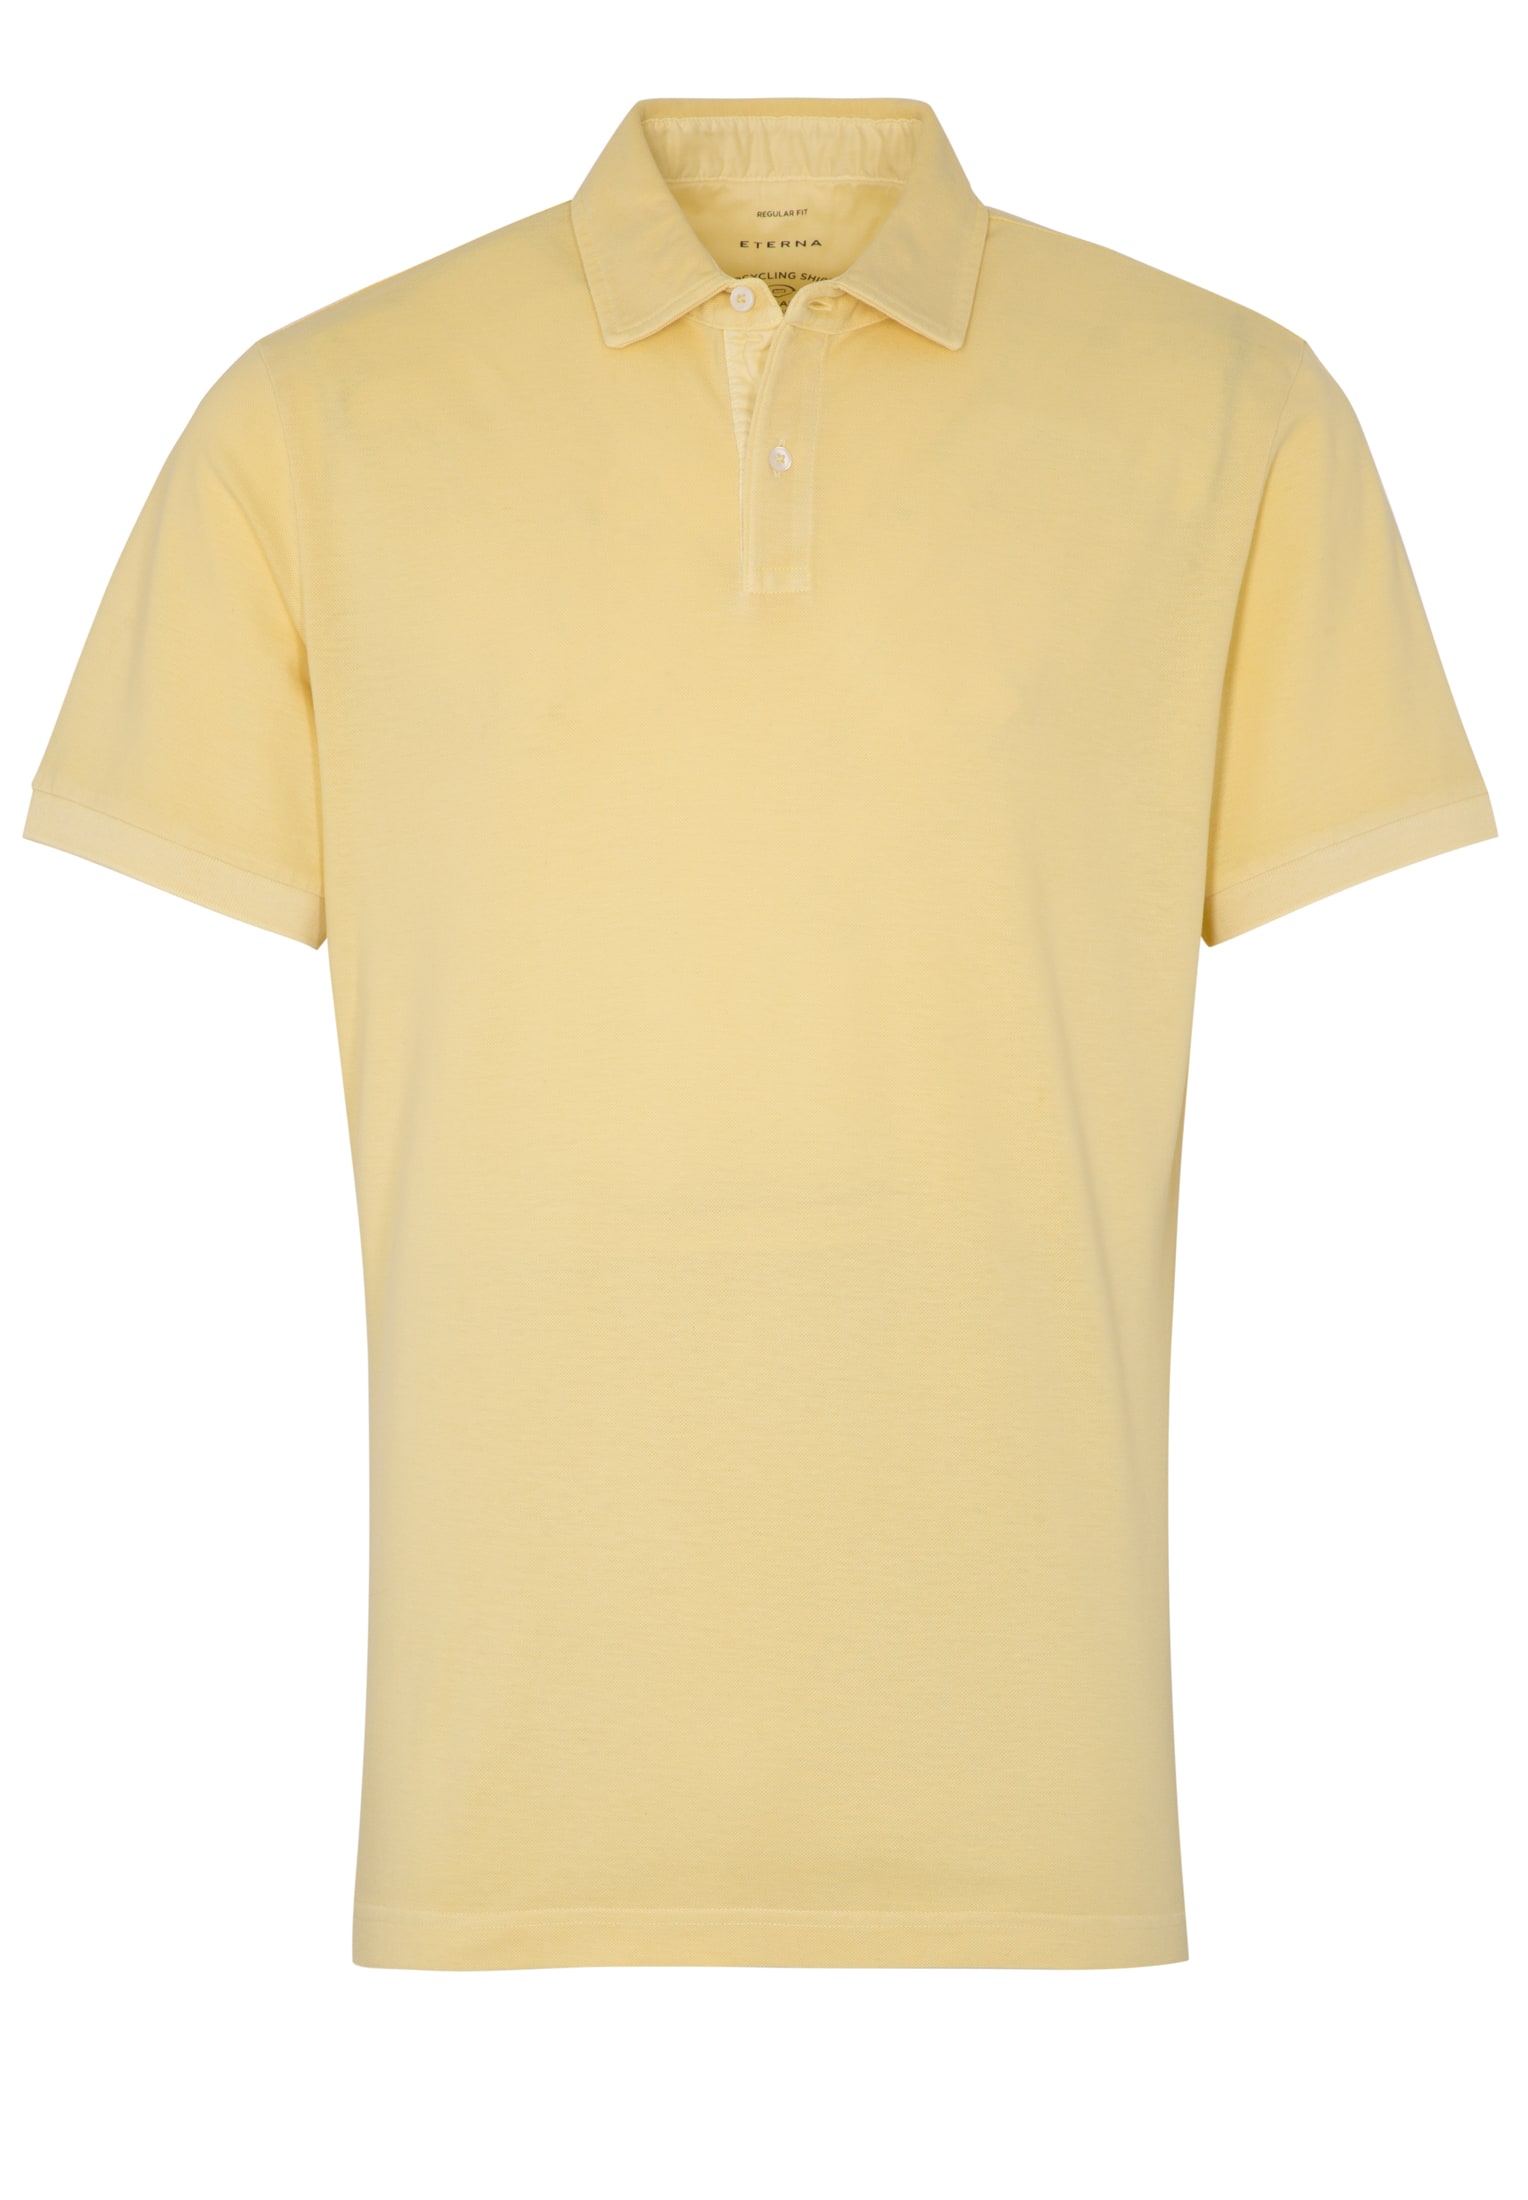 MODERN FIT unifarben 4XL | gelb | | Kurzarm 1SP00087-07-01-4XL-1/2 Poloshirt in gelb 